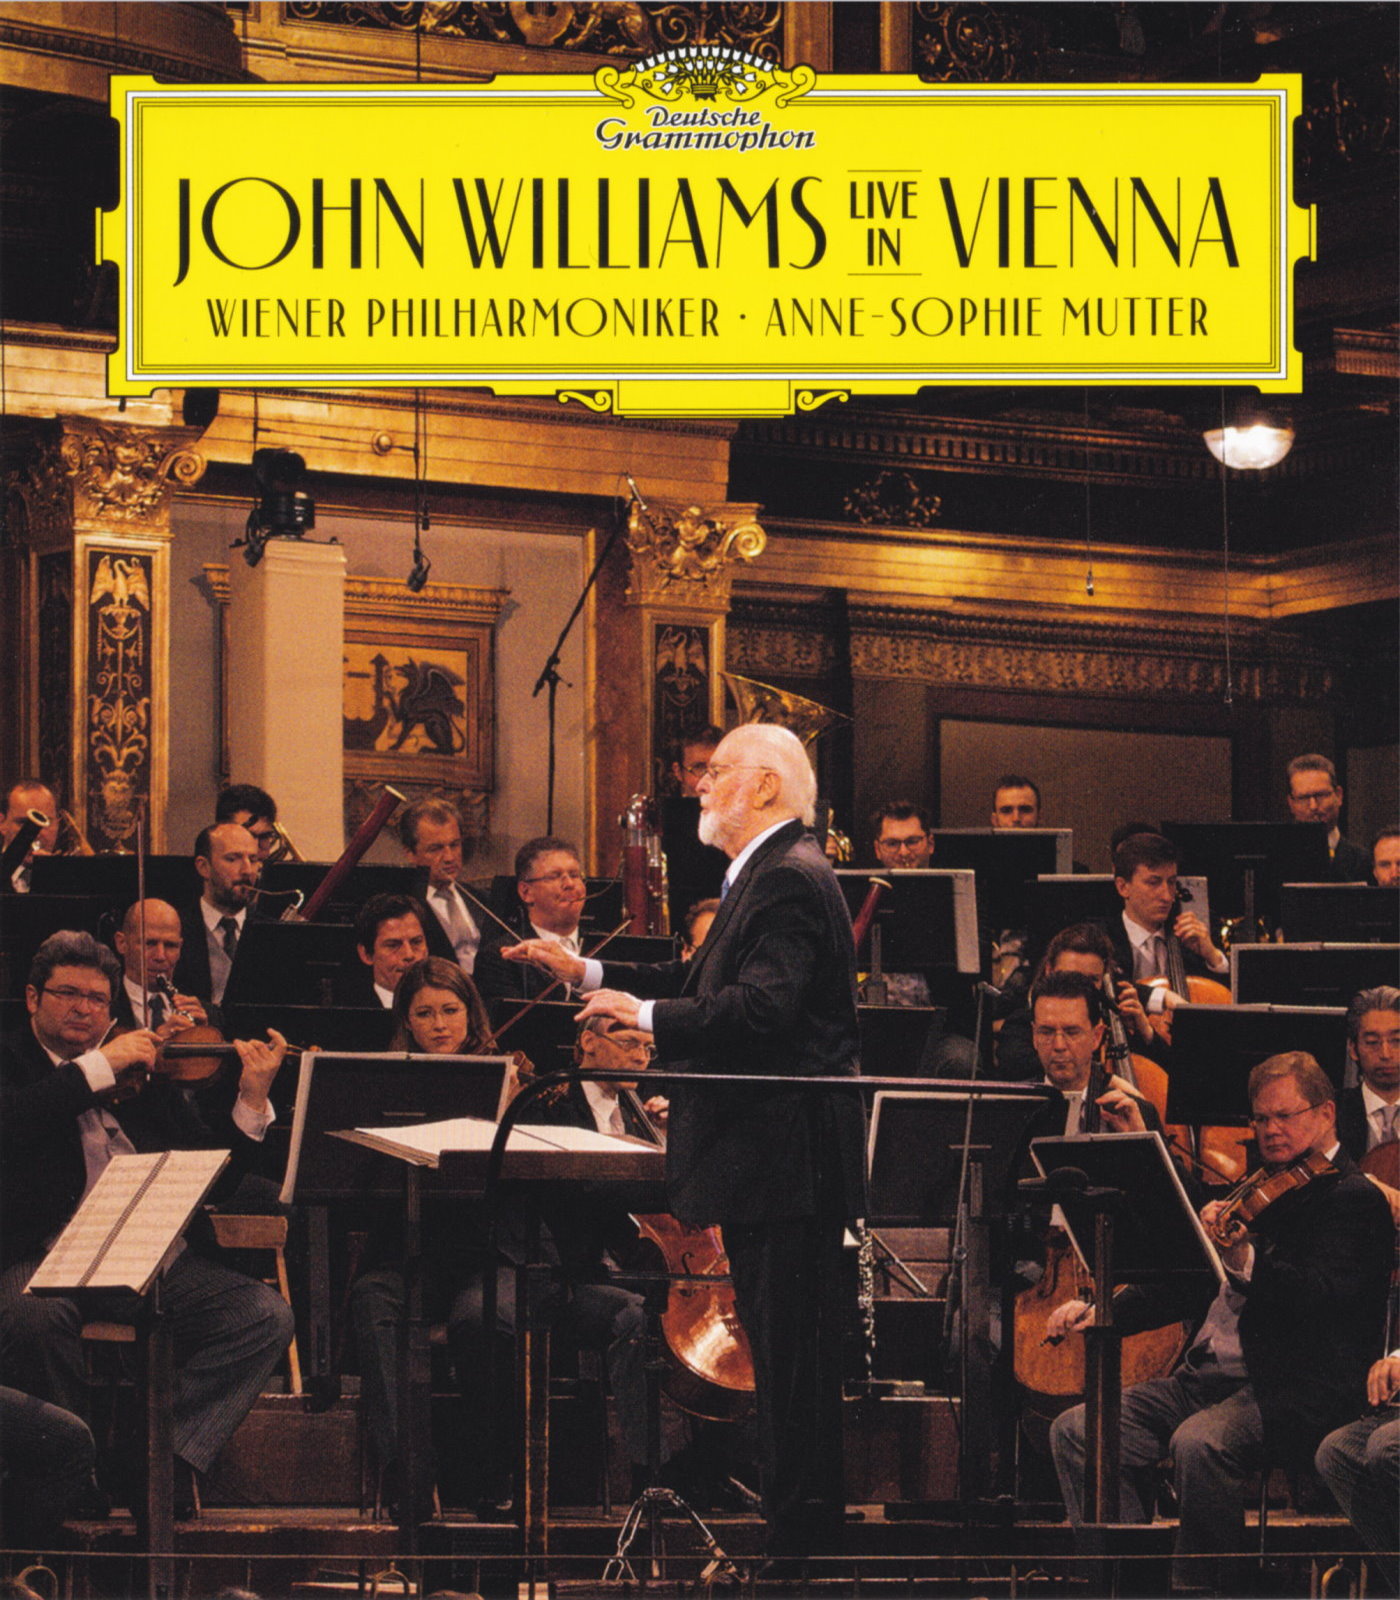 Cover - John Williams - Live in Vienna.jpg